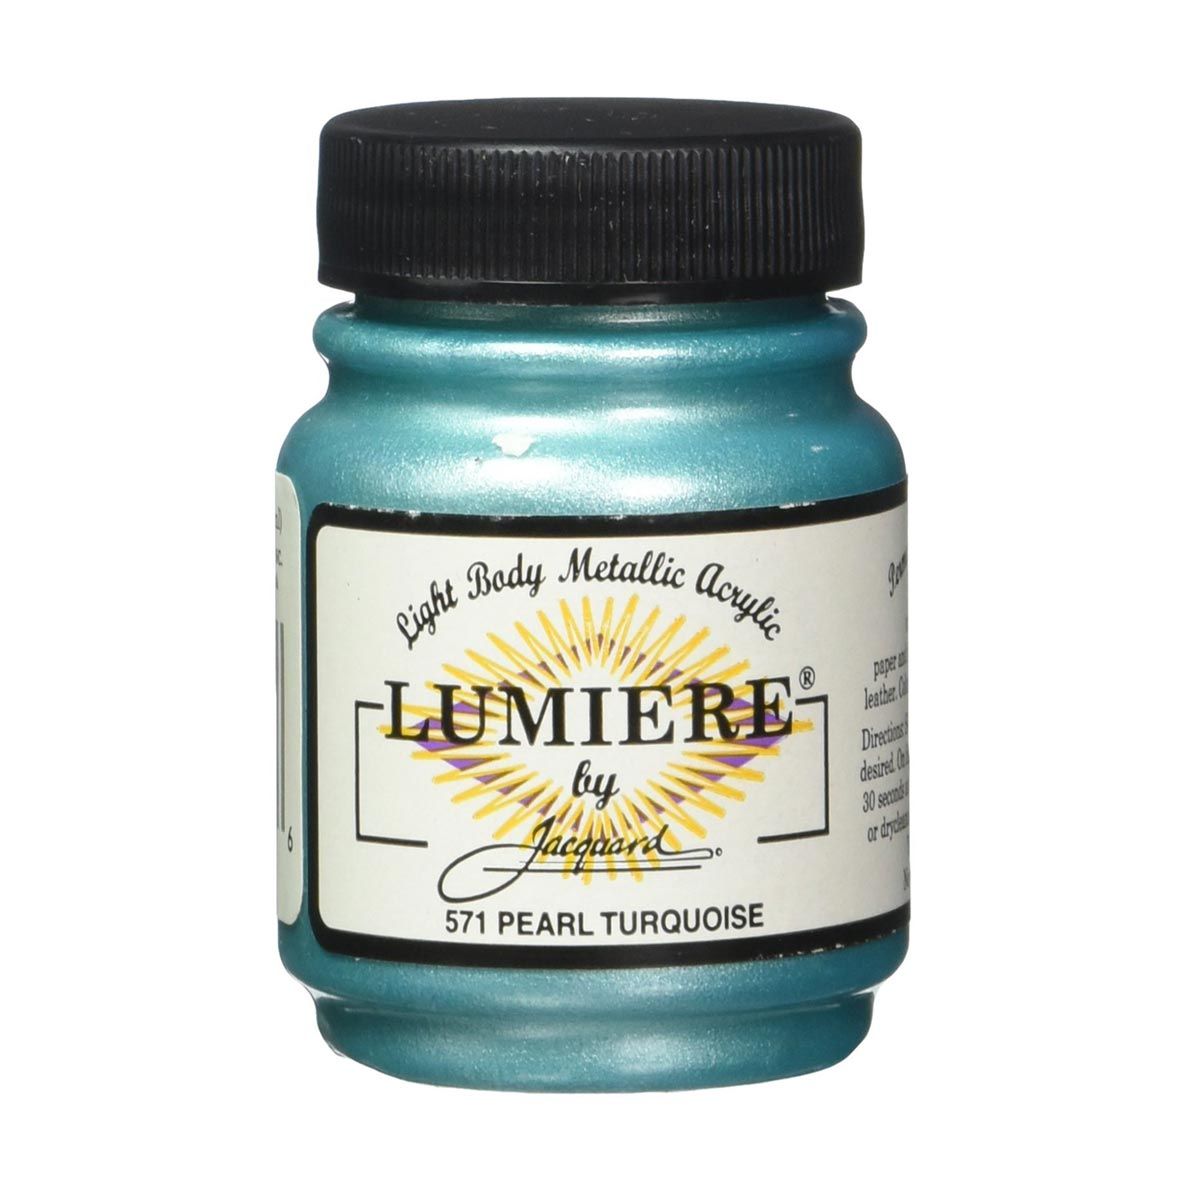 Jacquard Lumiere Acrylic 571 Pearl Turquoise 2.25-oz Jar